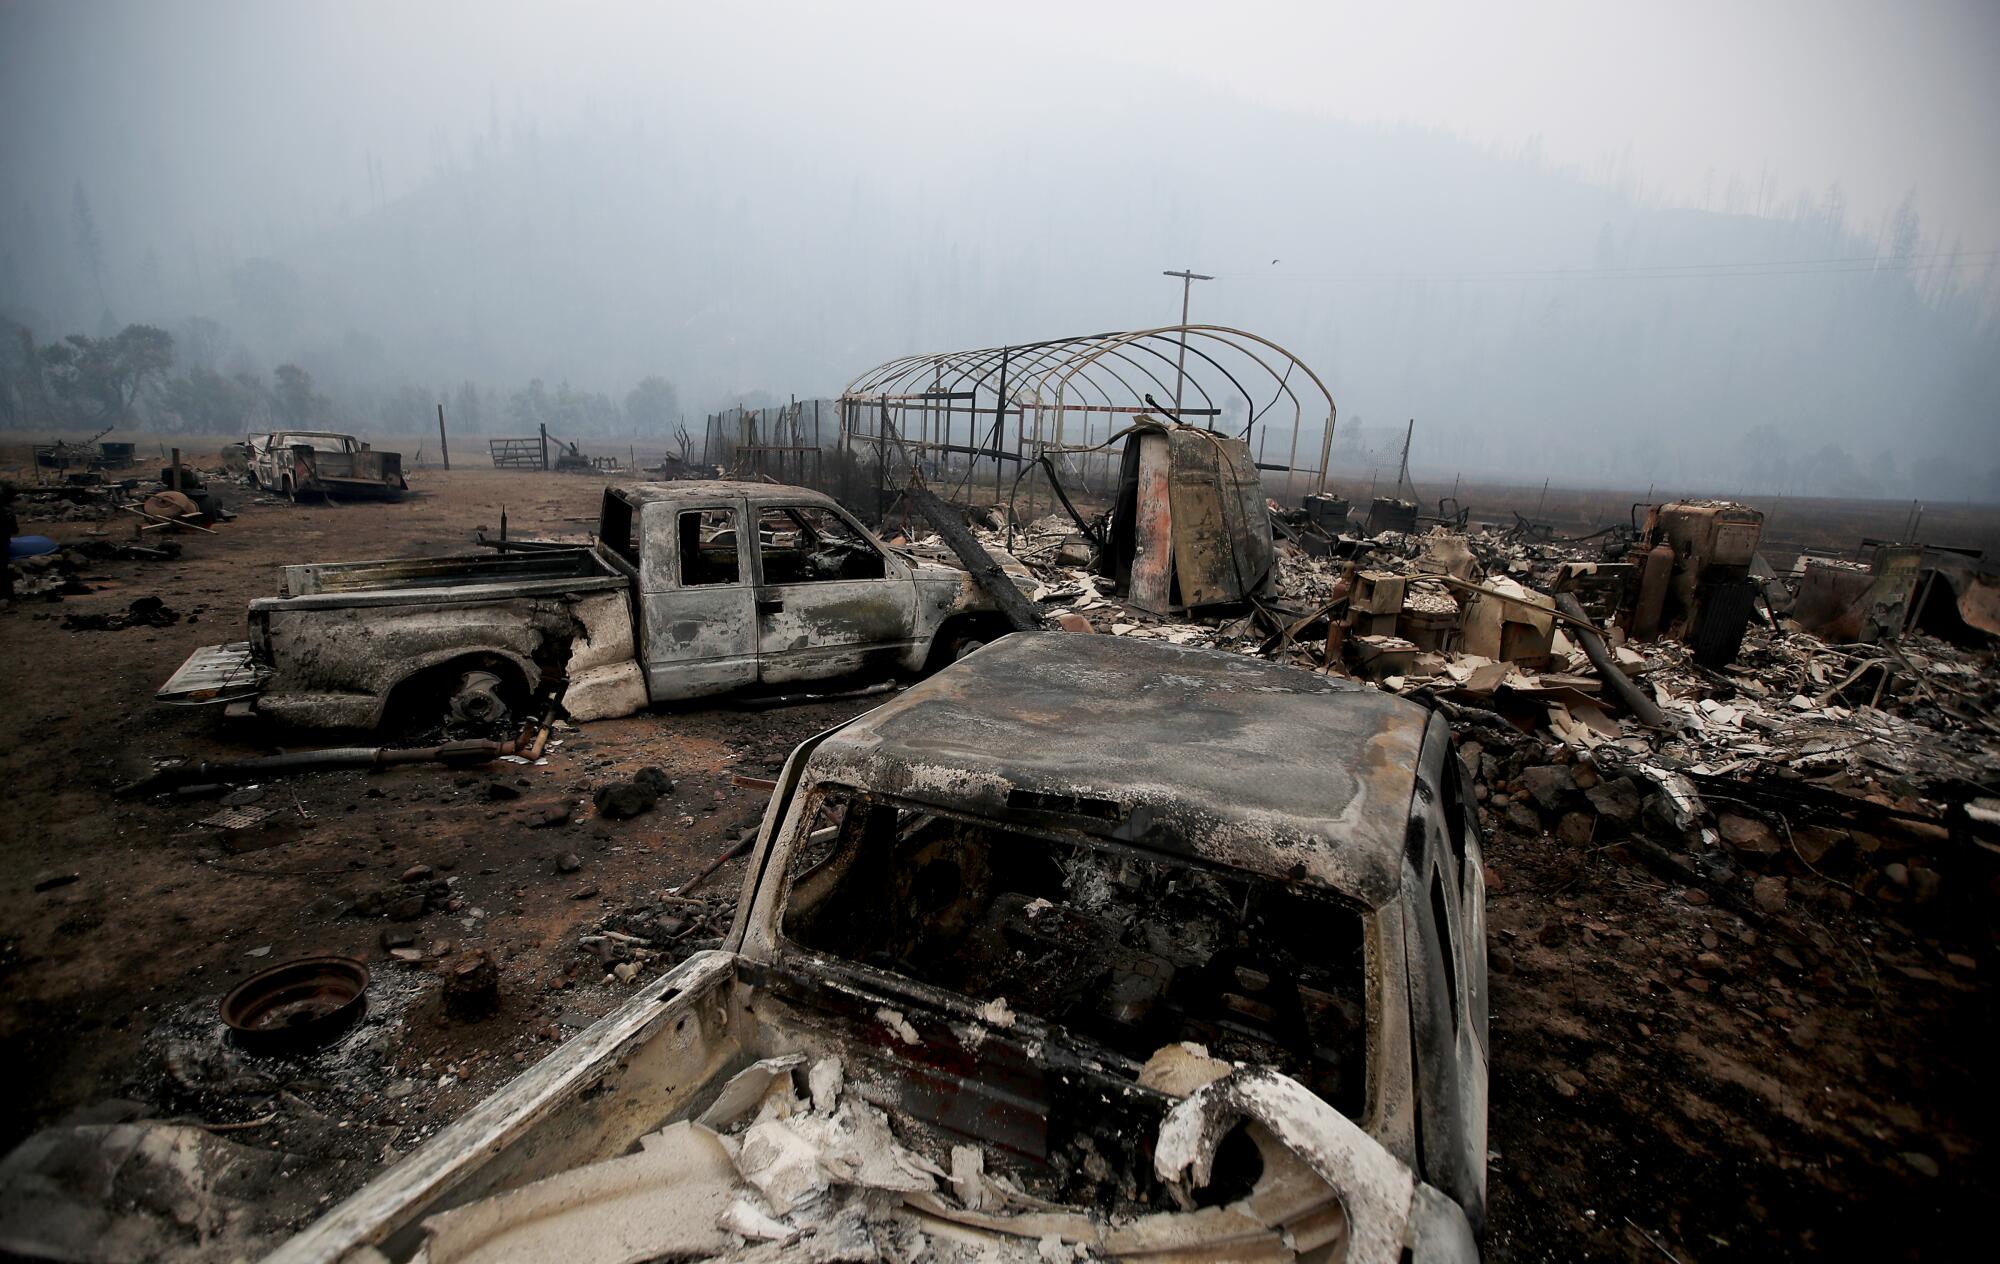 A scorched property near Yreka, Calif.